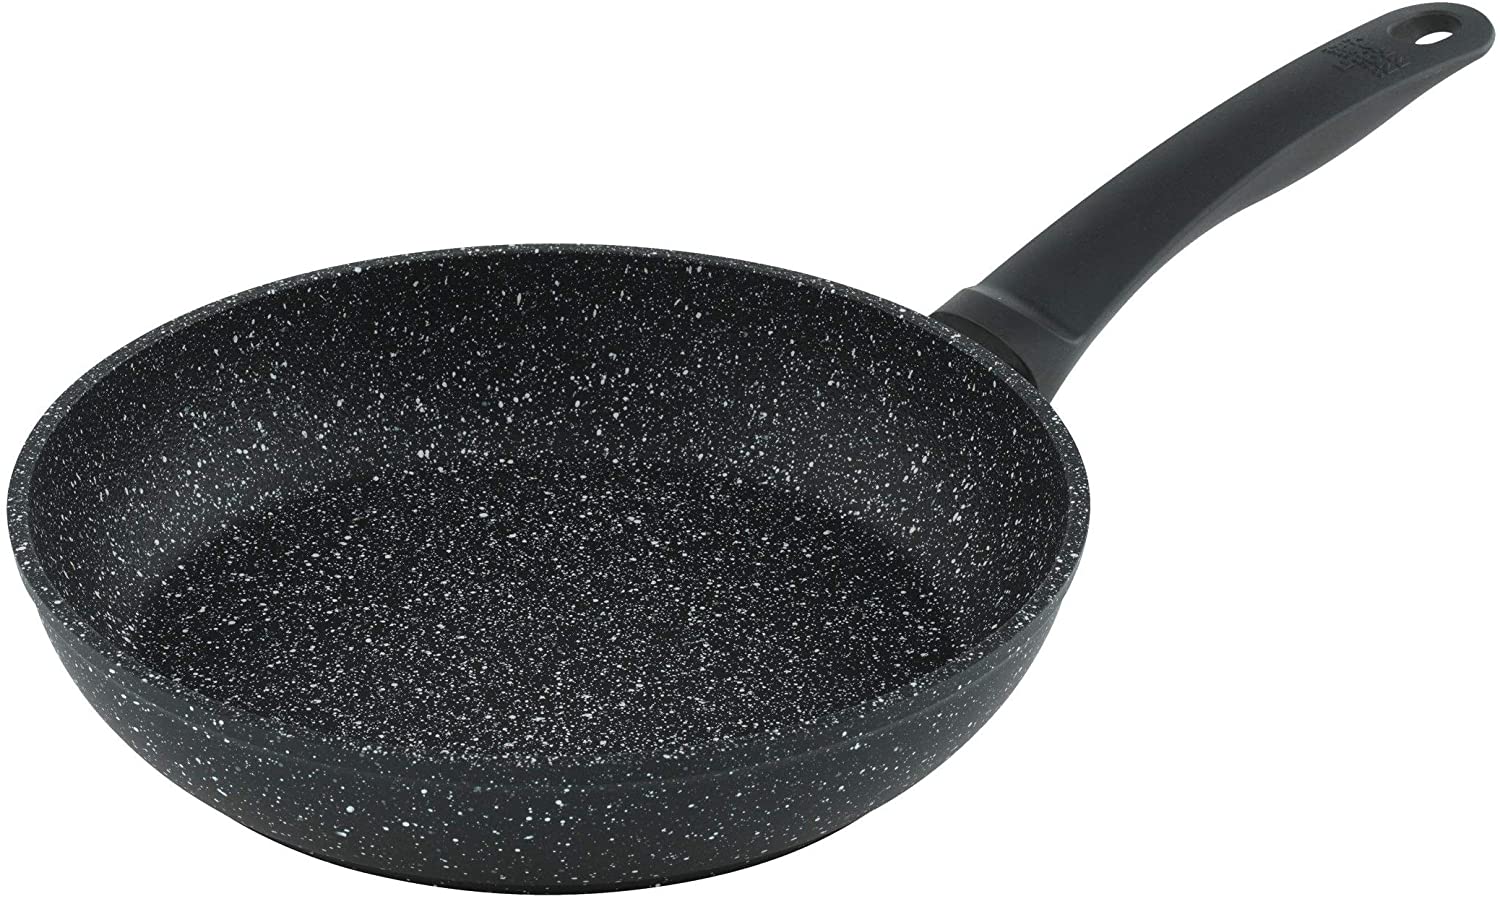 Kuhn Rikon Easy Induction Marble Frying Pan Frying Pan Induction Pan Diameter 26 cm 31558